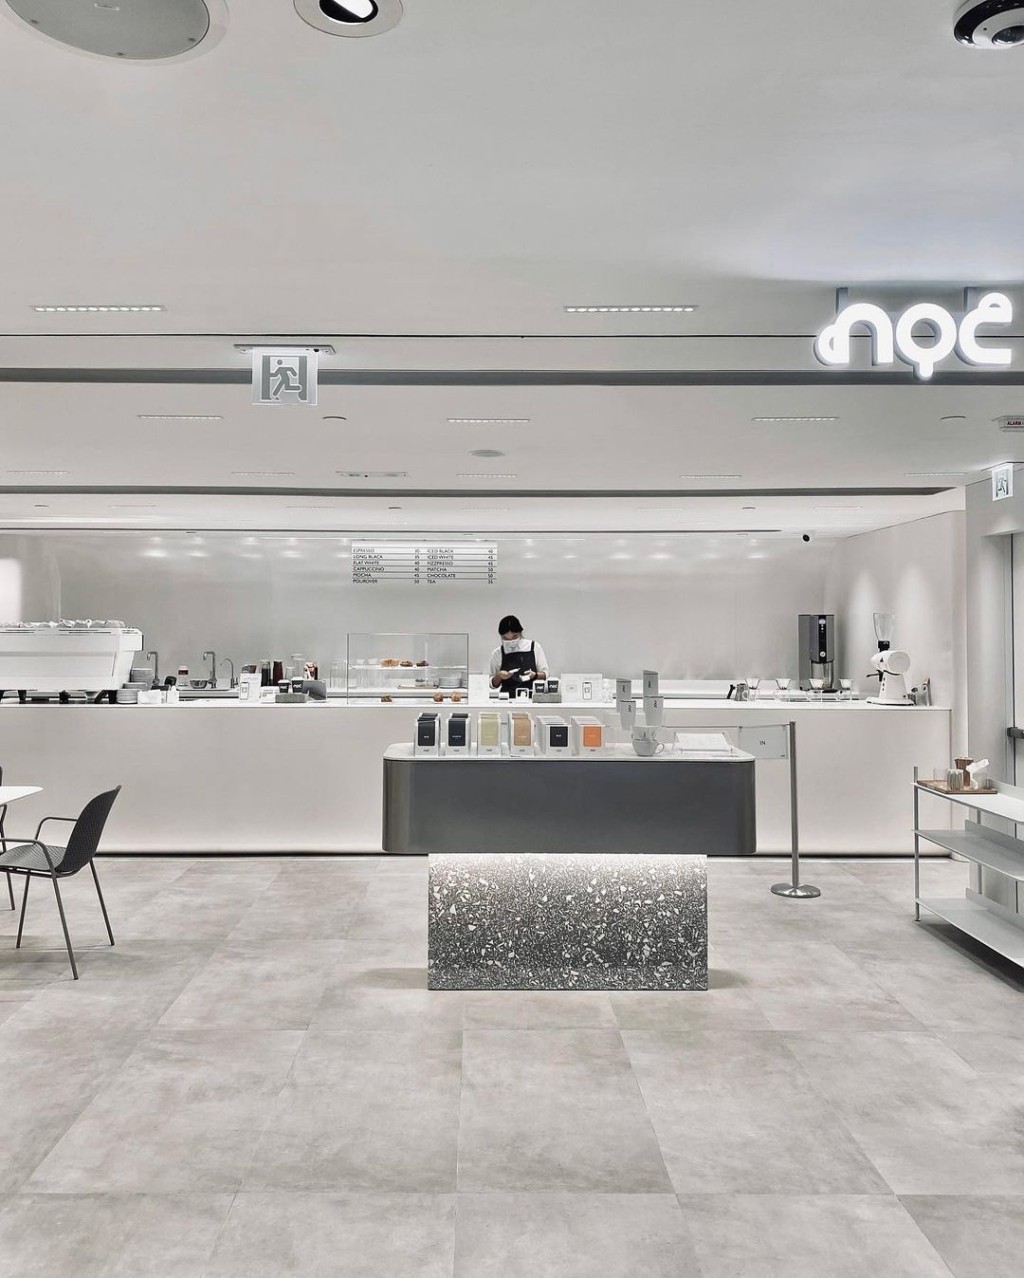 人氣文青咖啡店 NOC Coffee Co. （圖片來源：Instagram@noccoffeeco）（示意圖）